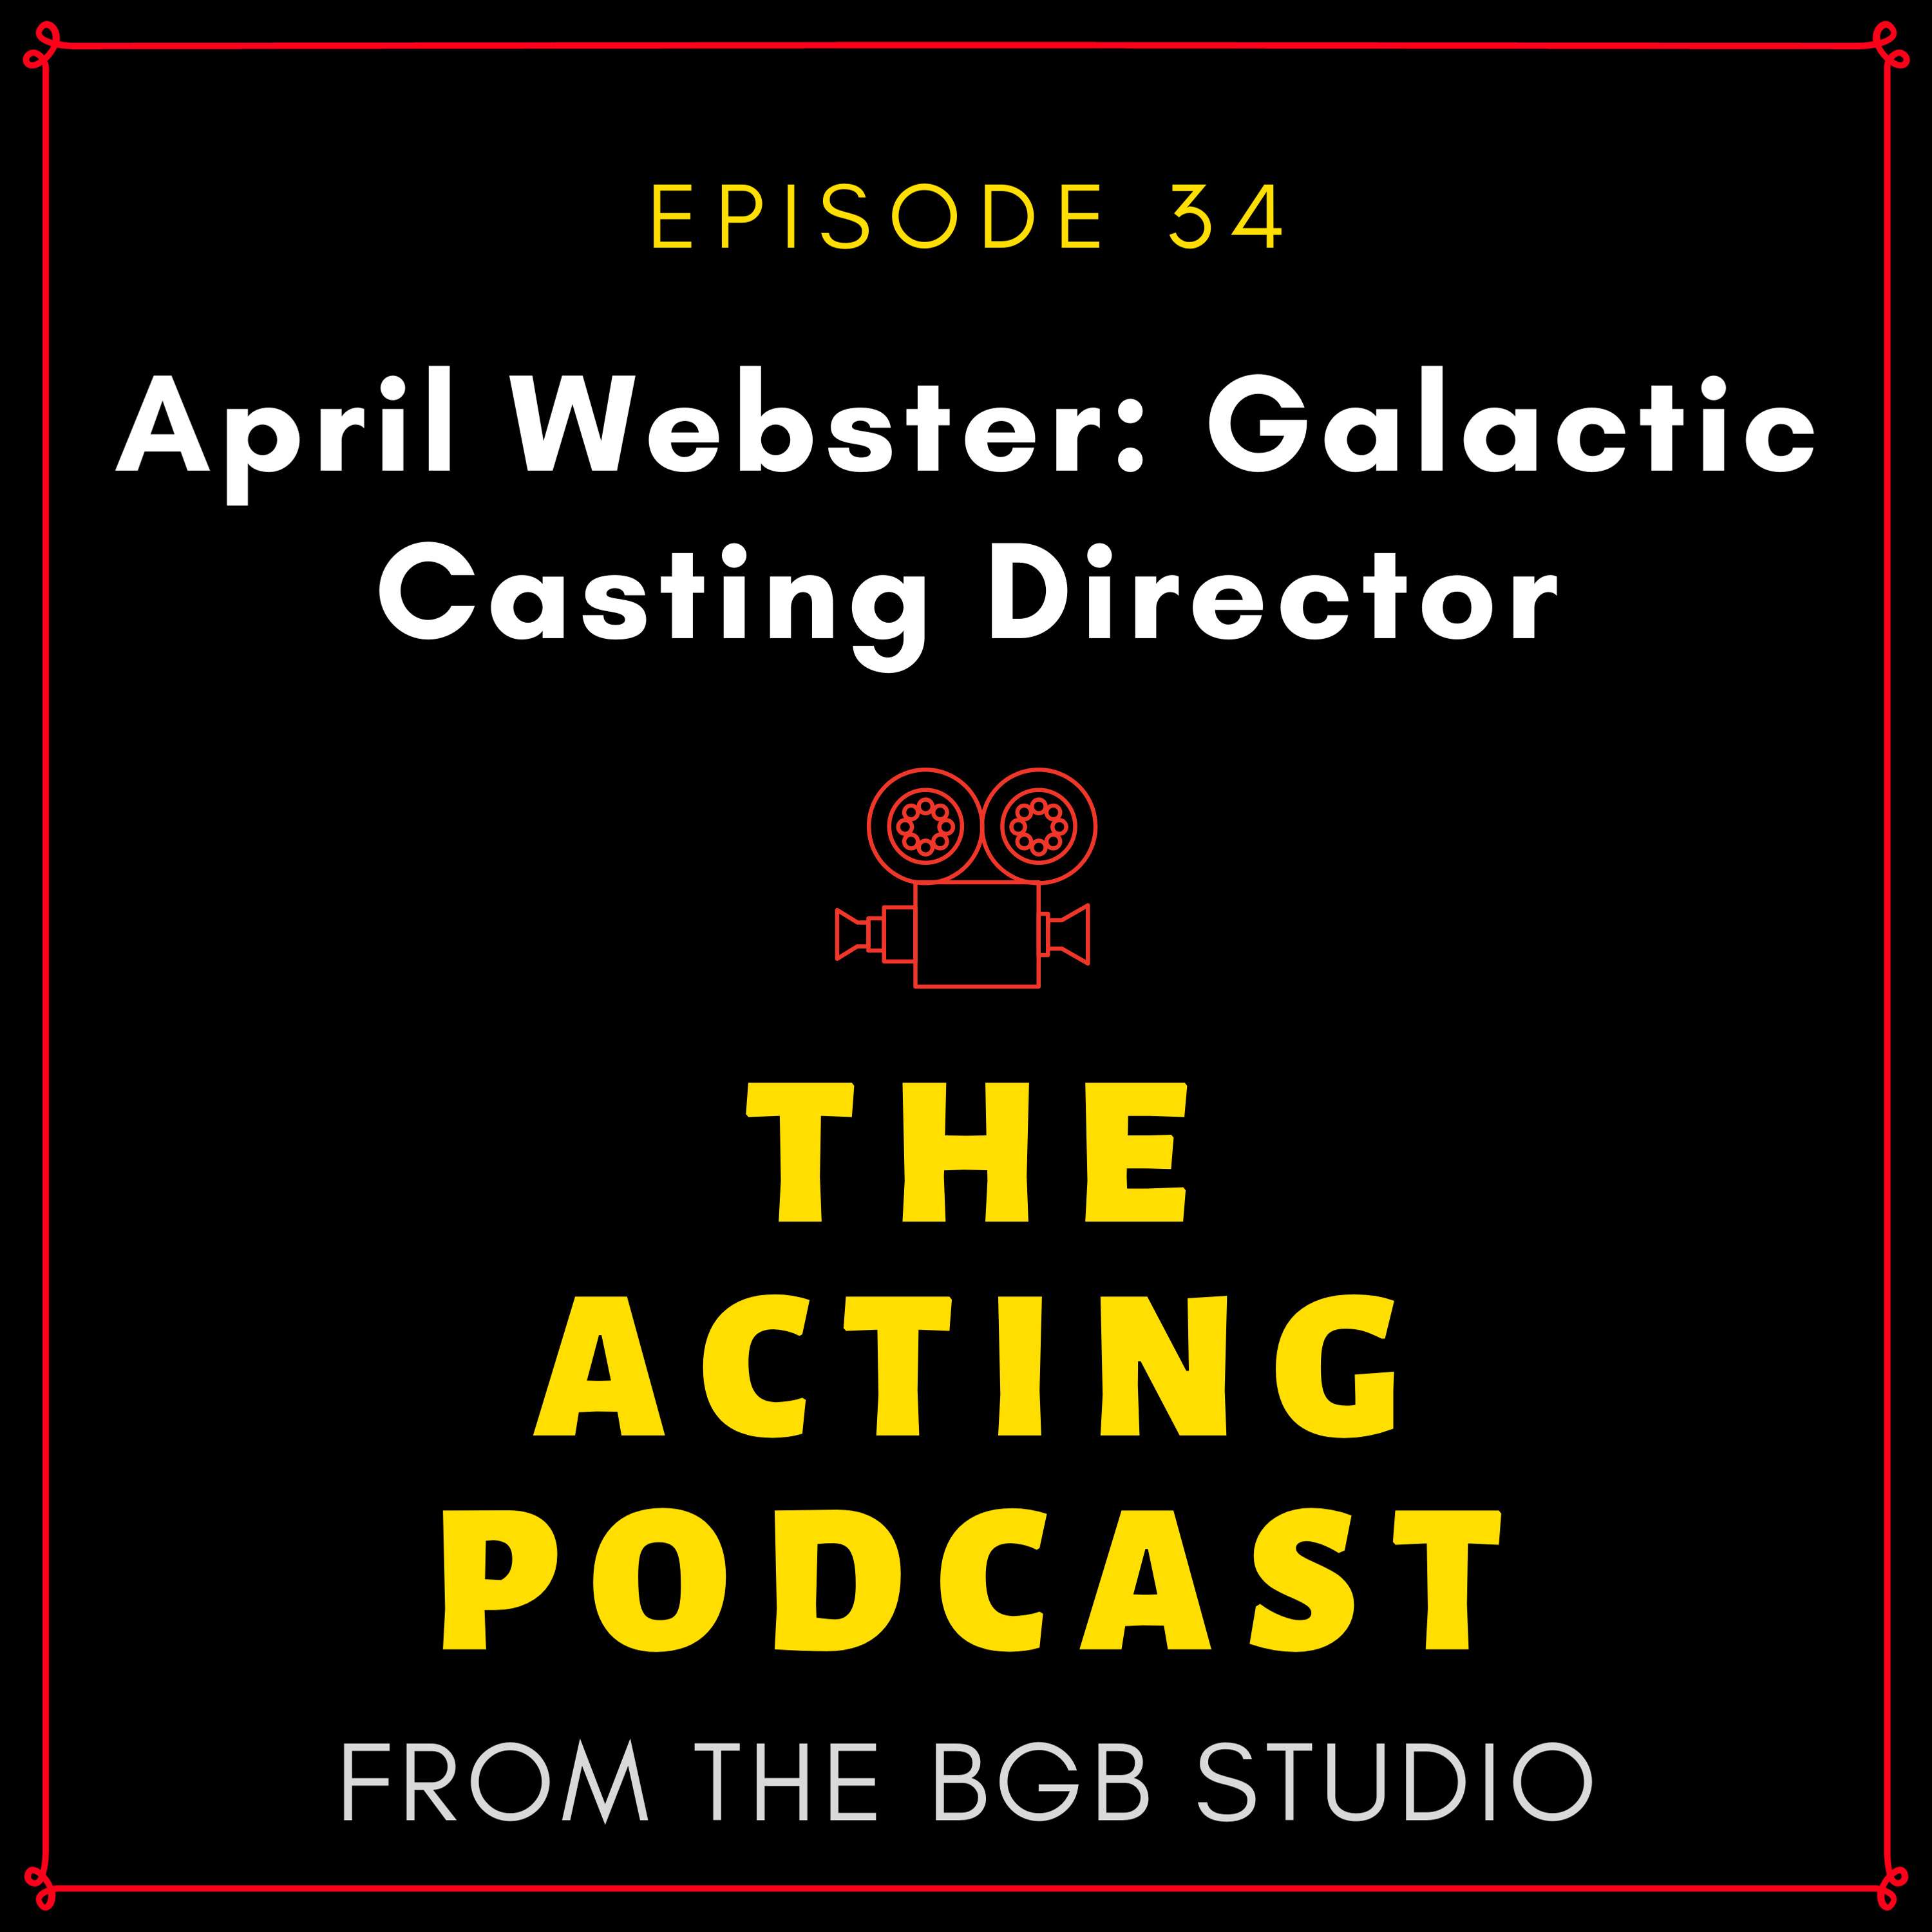 April Webster: Galactic Casting Director